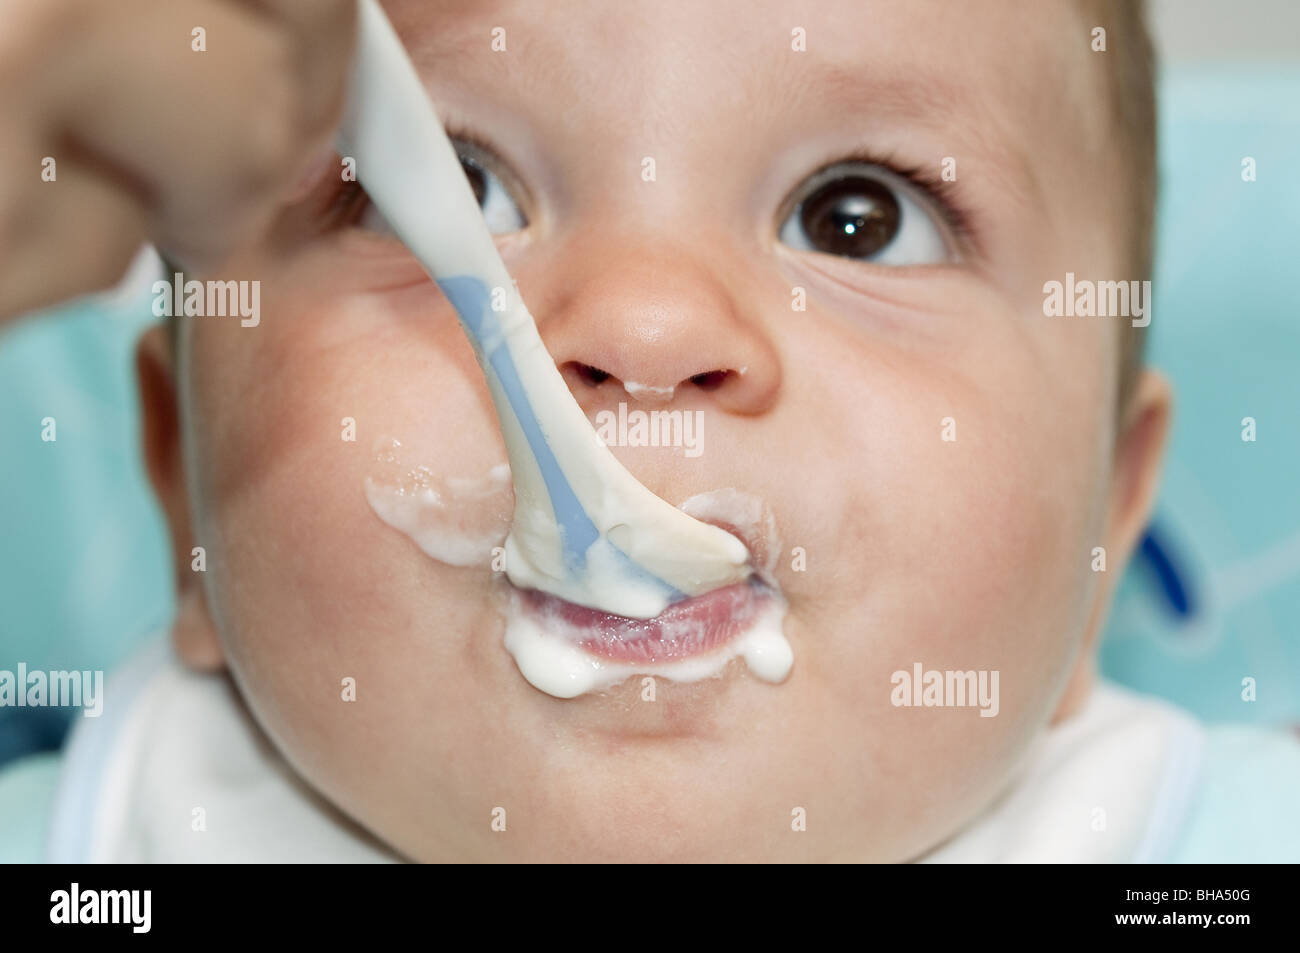 Baby Food Around Mouth Stockfotos & Baby Food Around Mouth ...